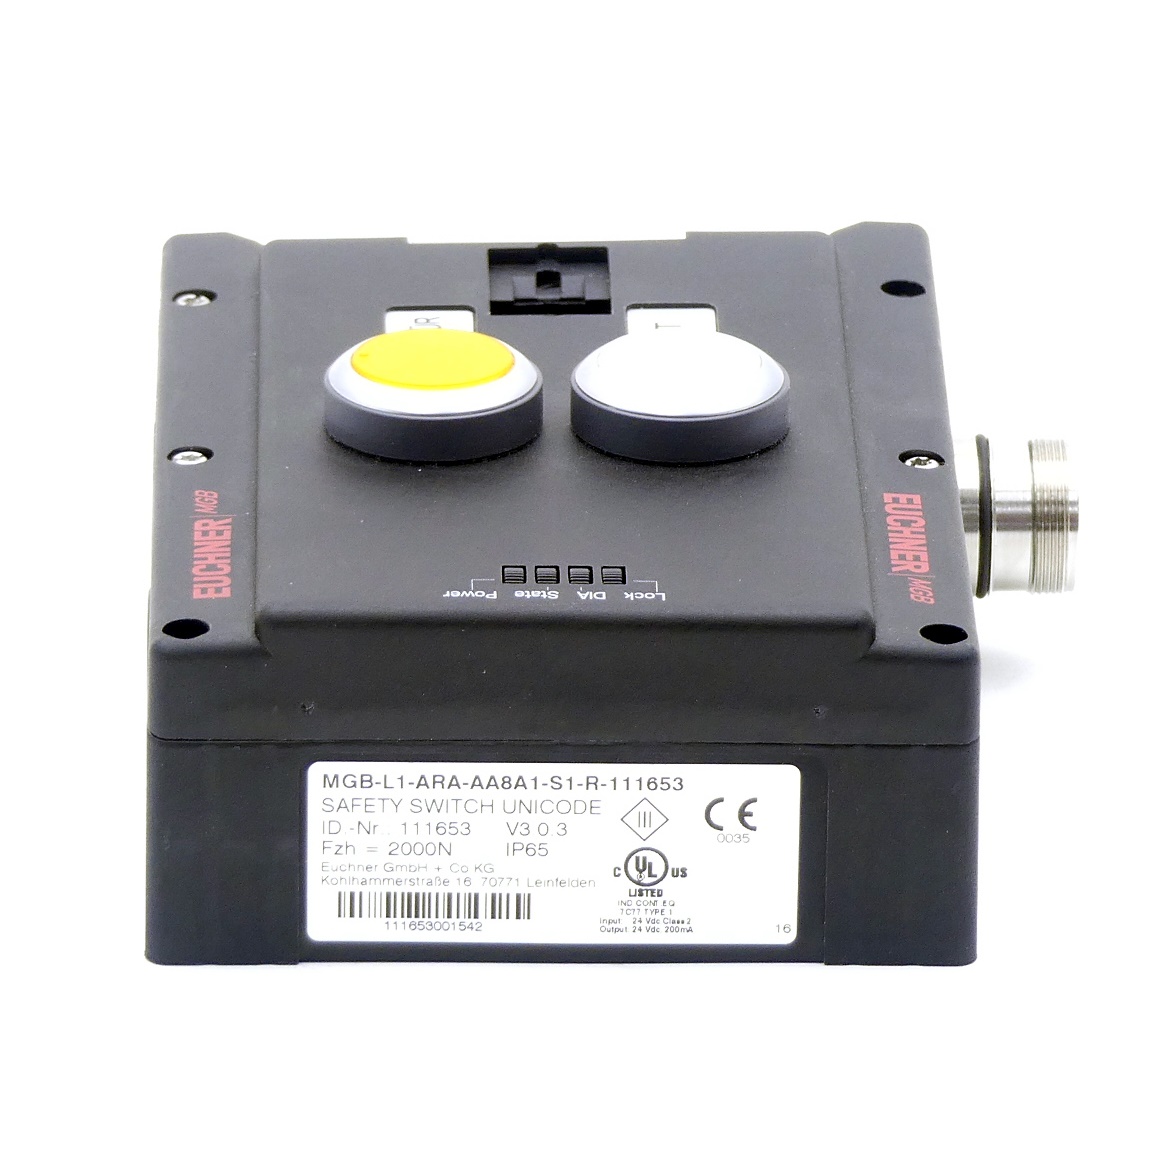 Safety Switch MGB-L1-ARA-AA8A1-S1-R 